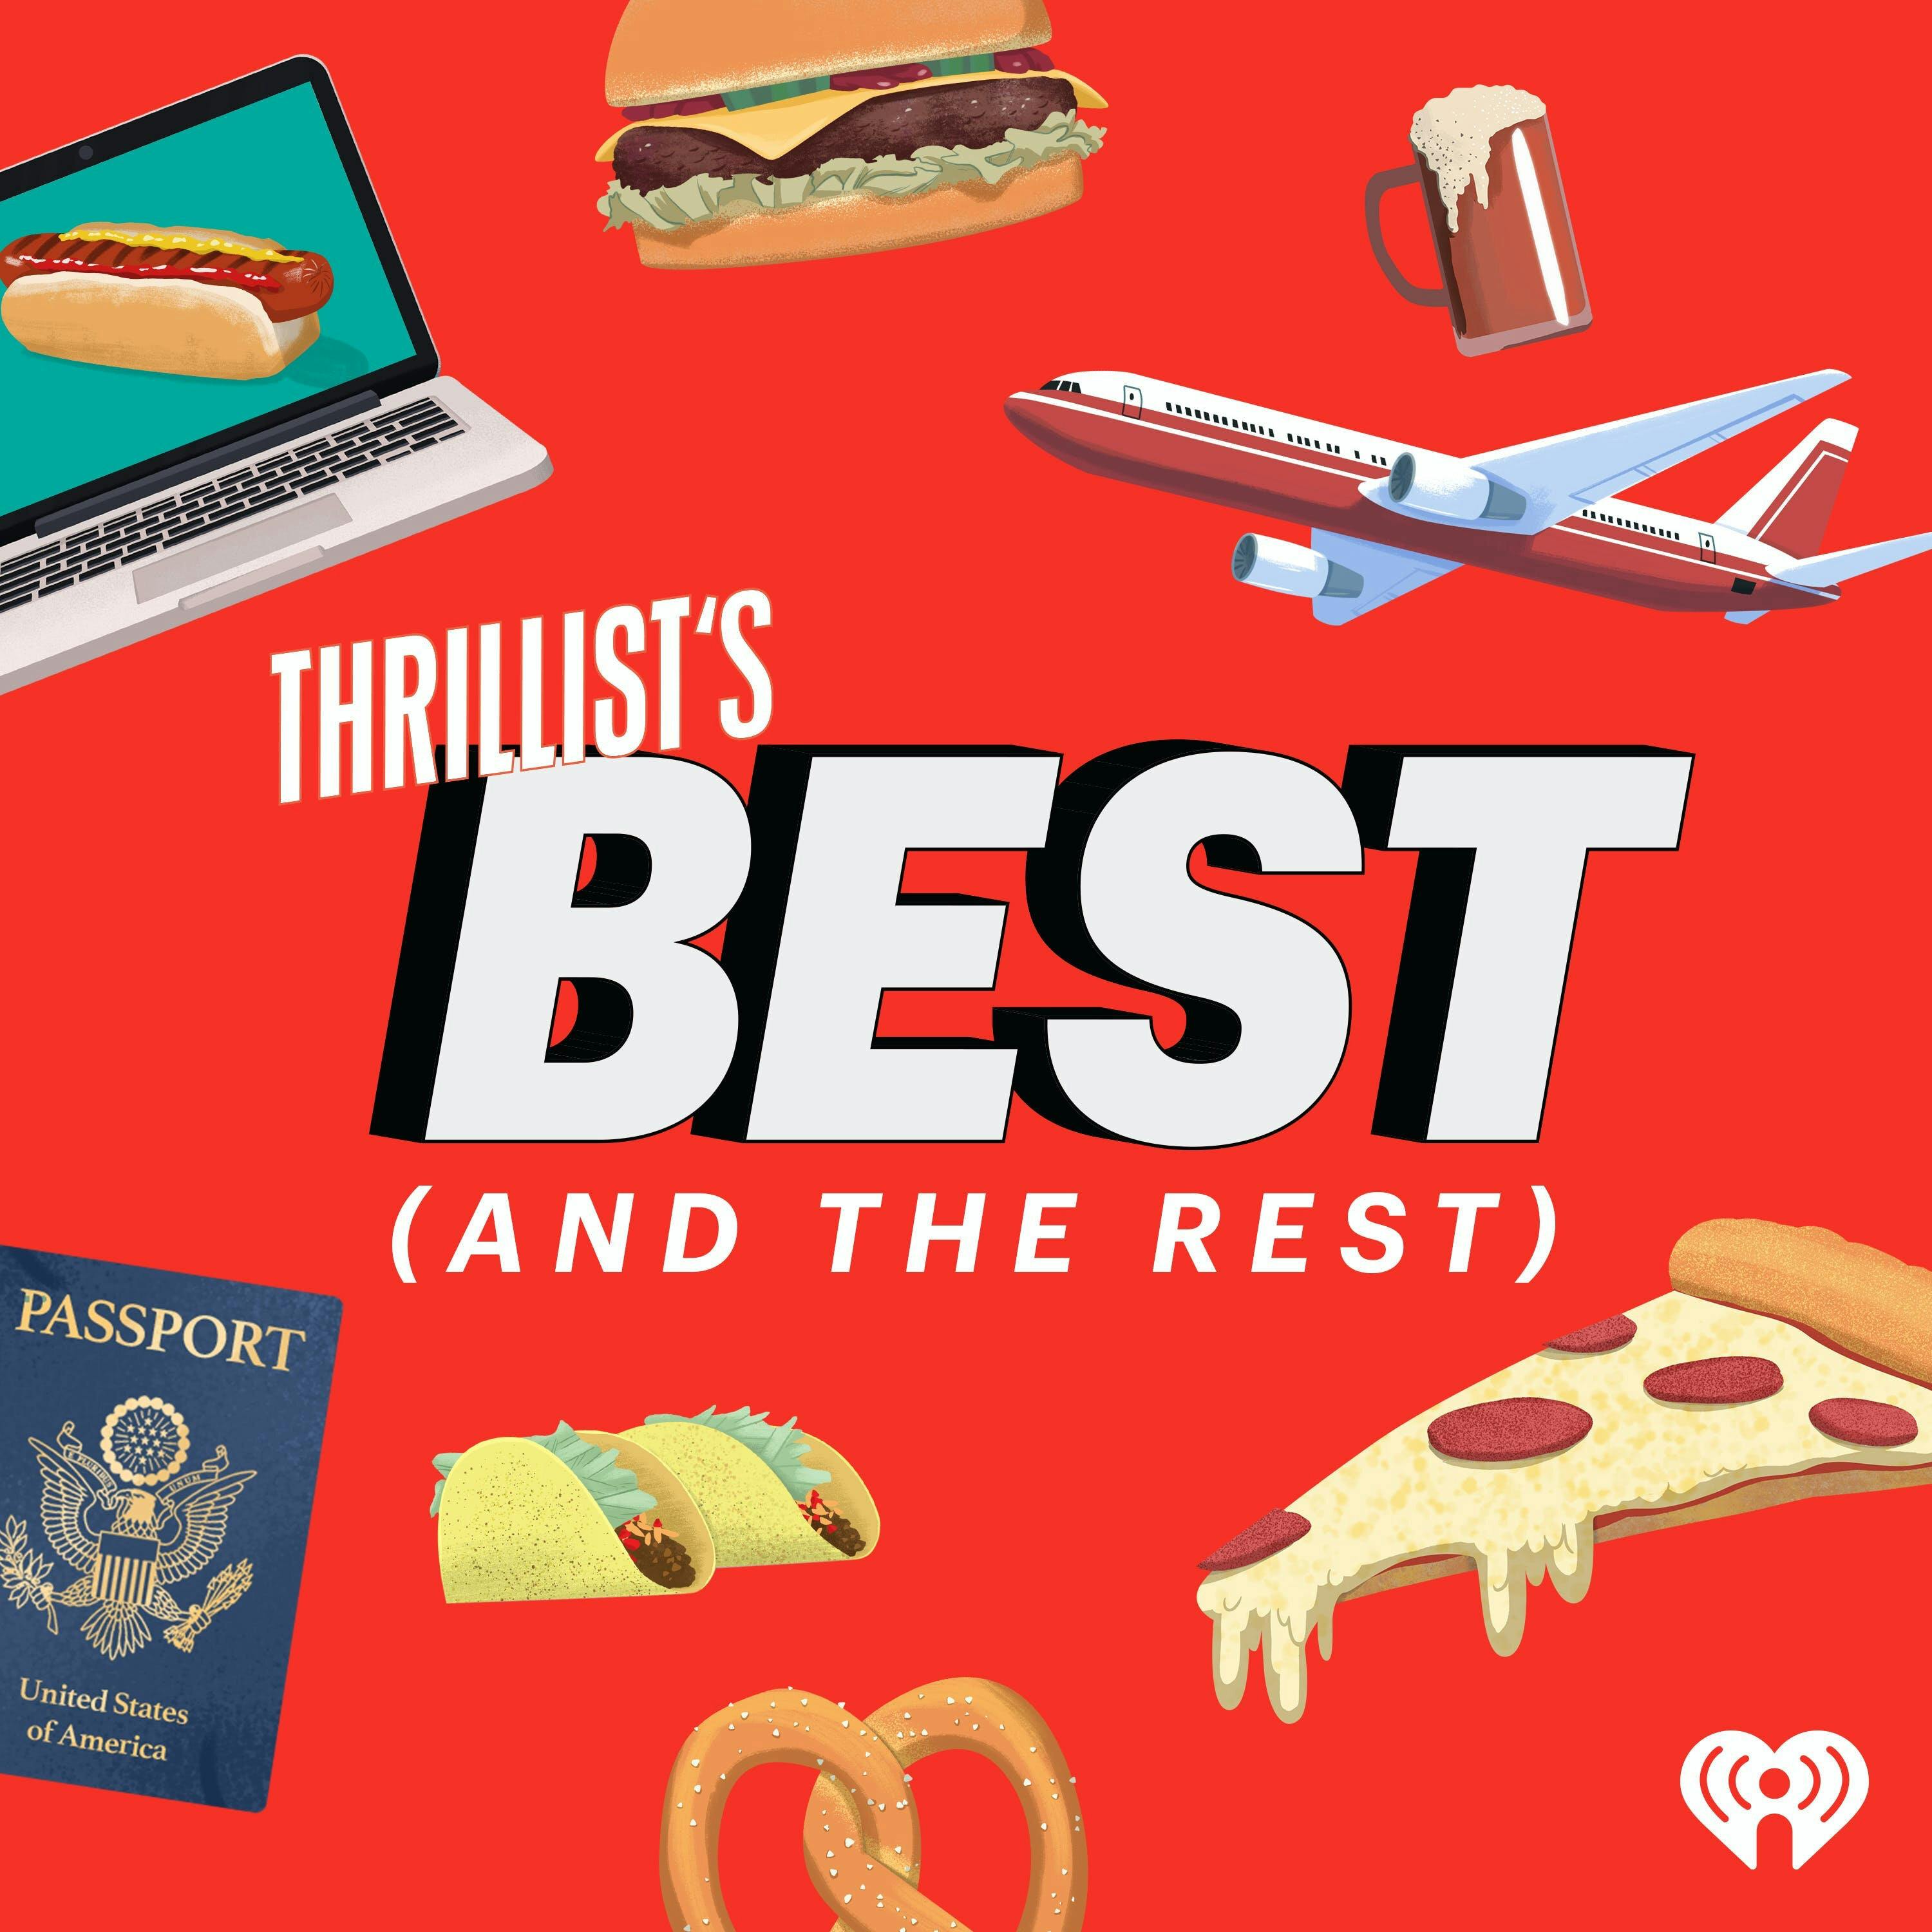 THRILLIST'S BEST: How to Find the Best Cheap Flight Deals Ever